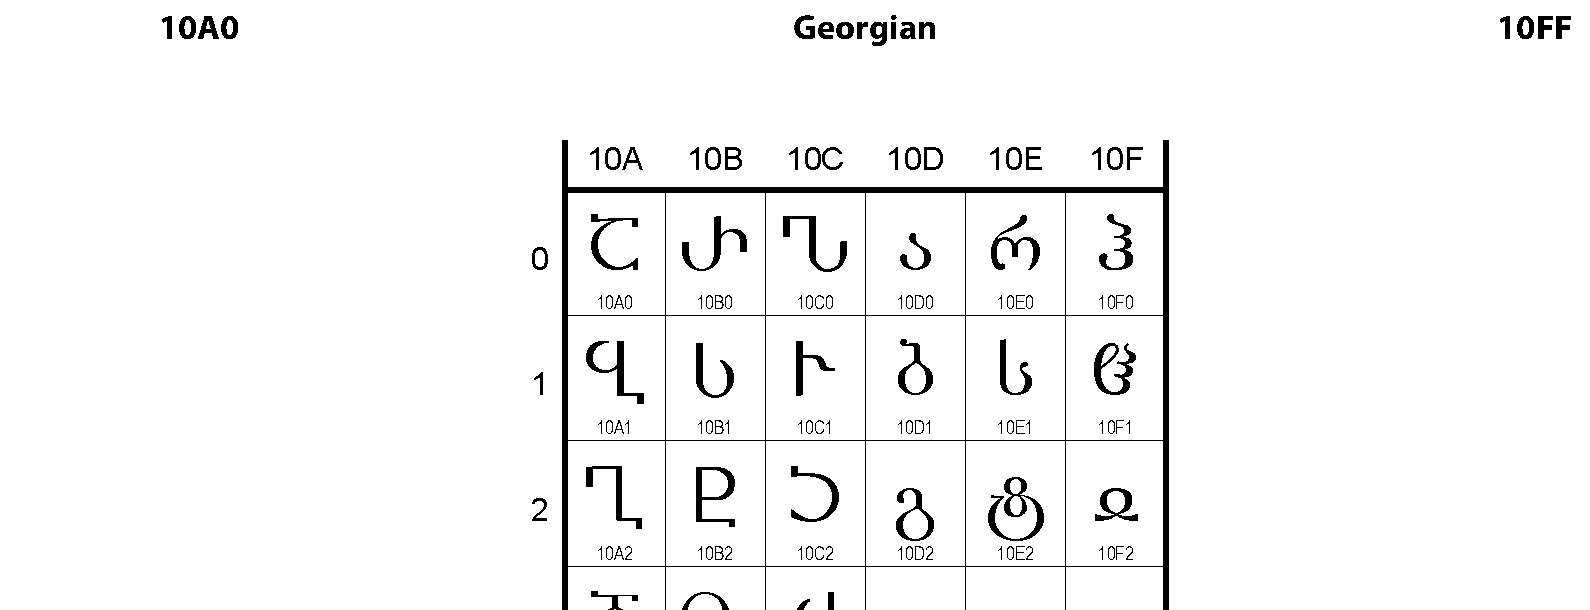 Unicode - Georgian